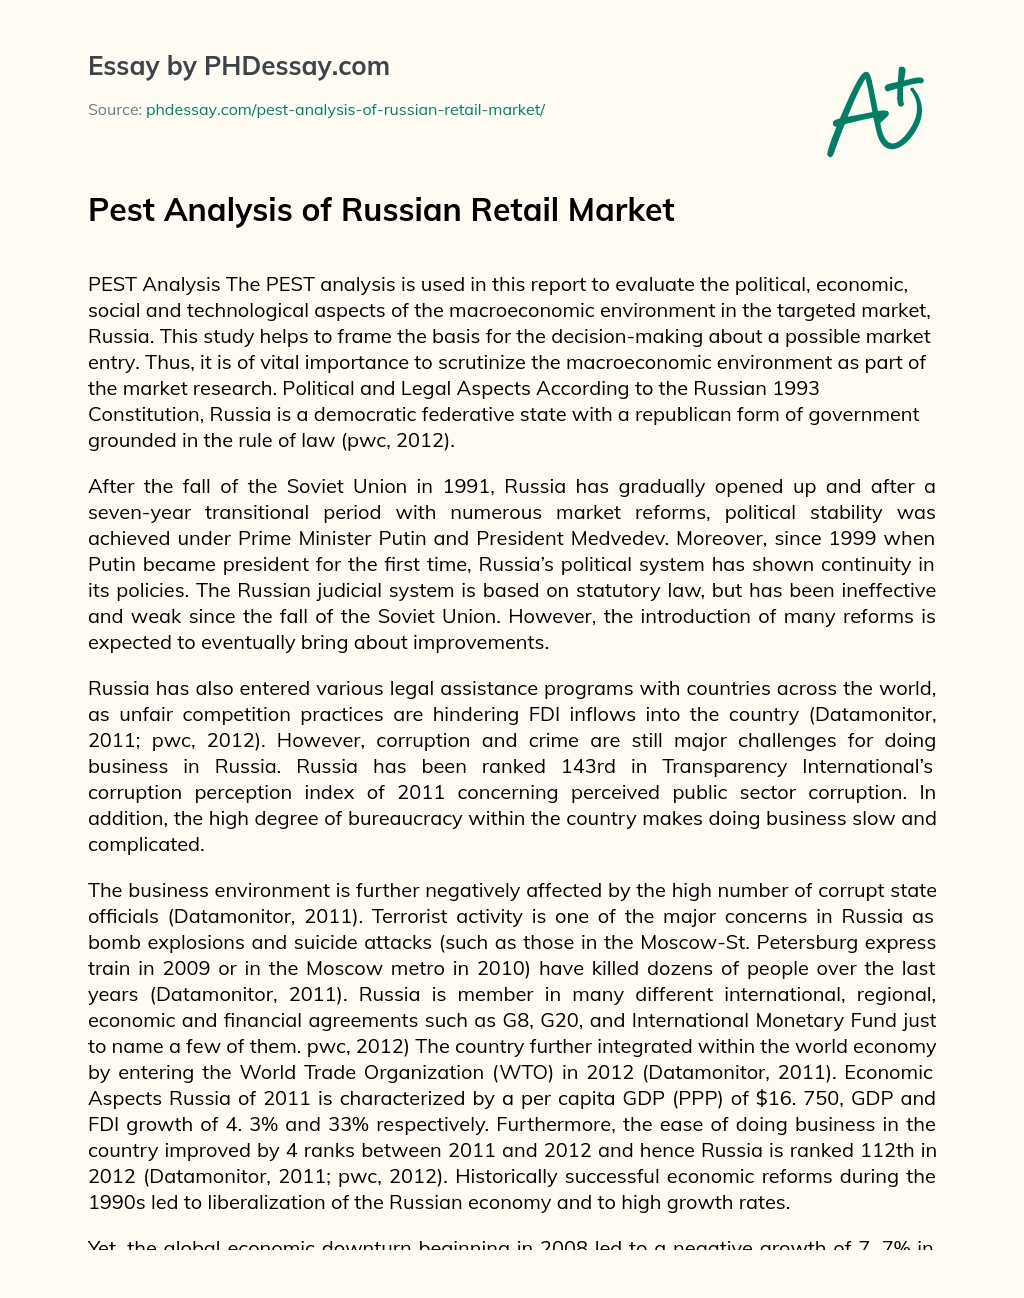 Pest Analysis of Russian Retail Market essay